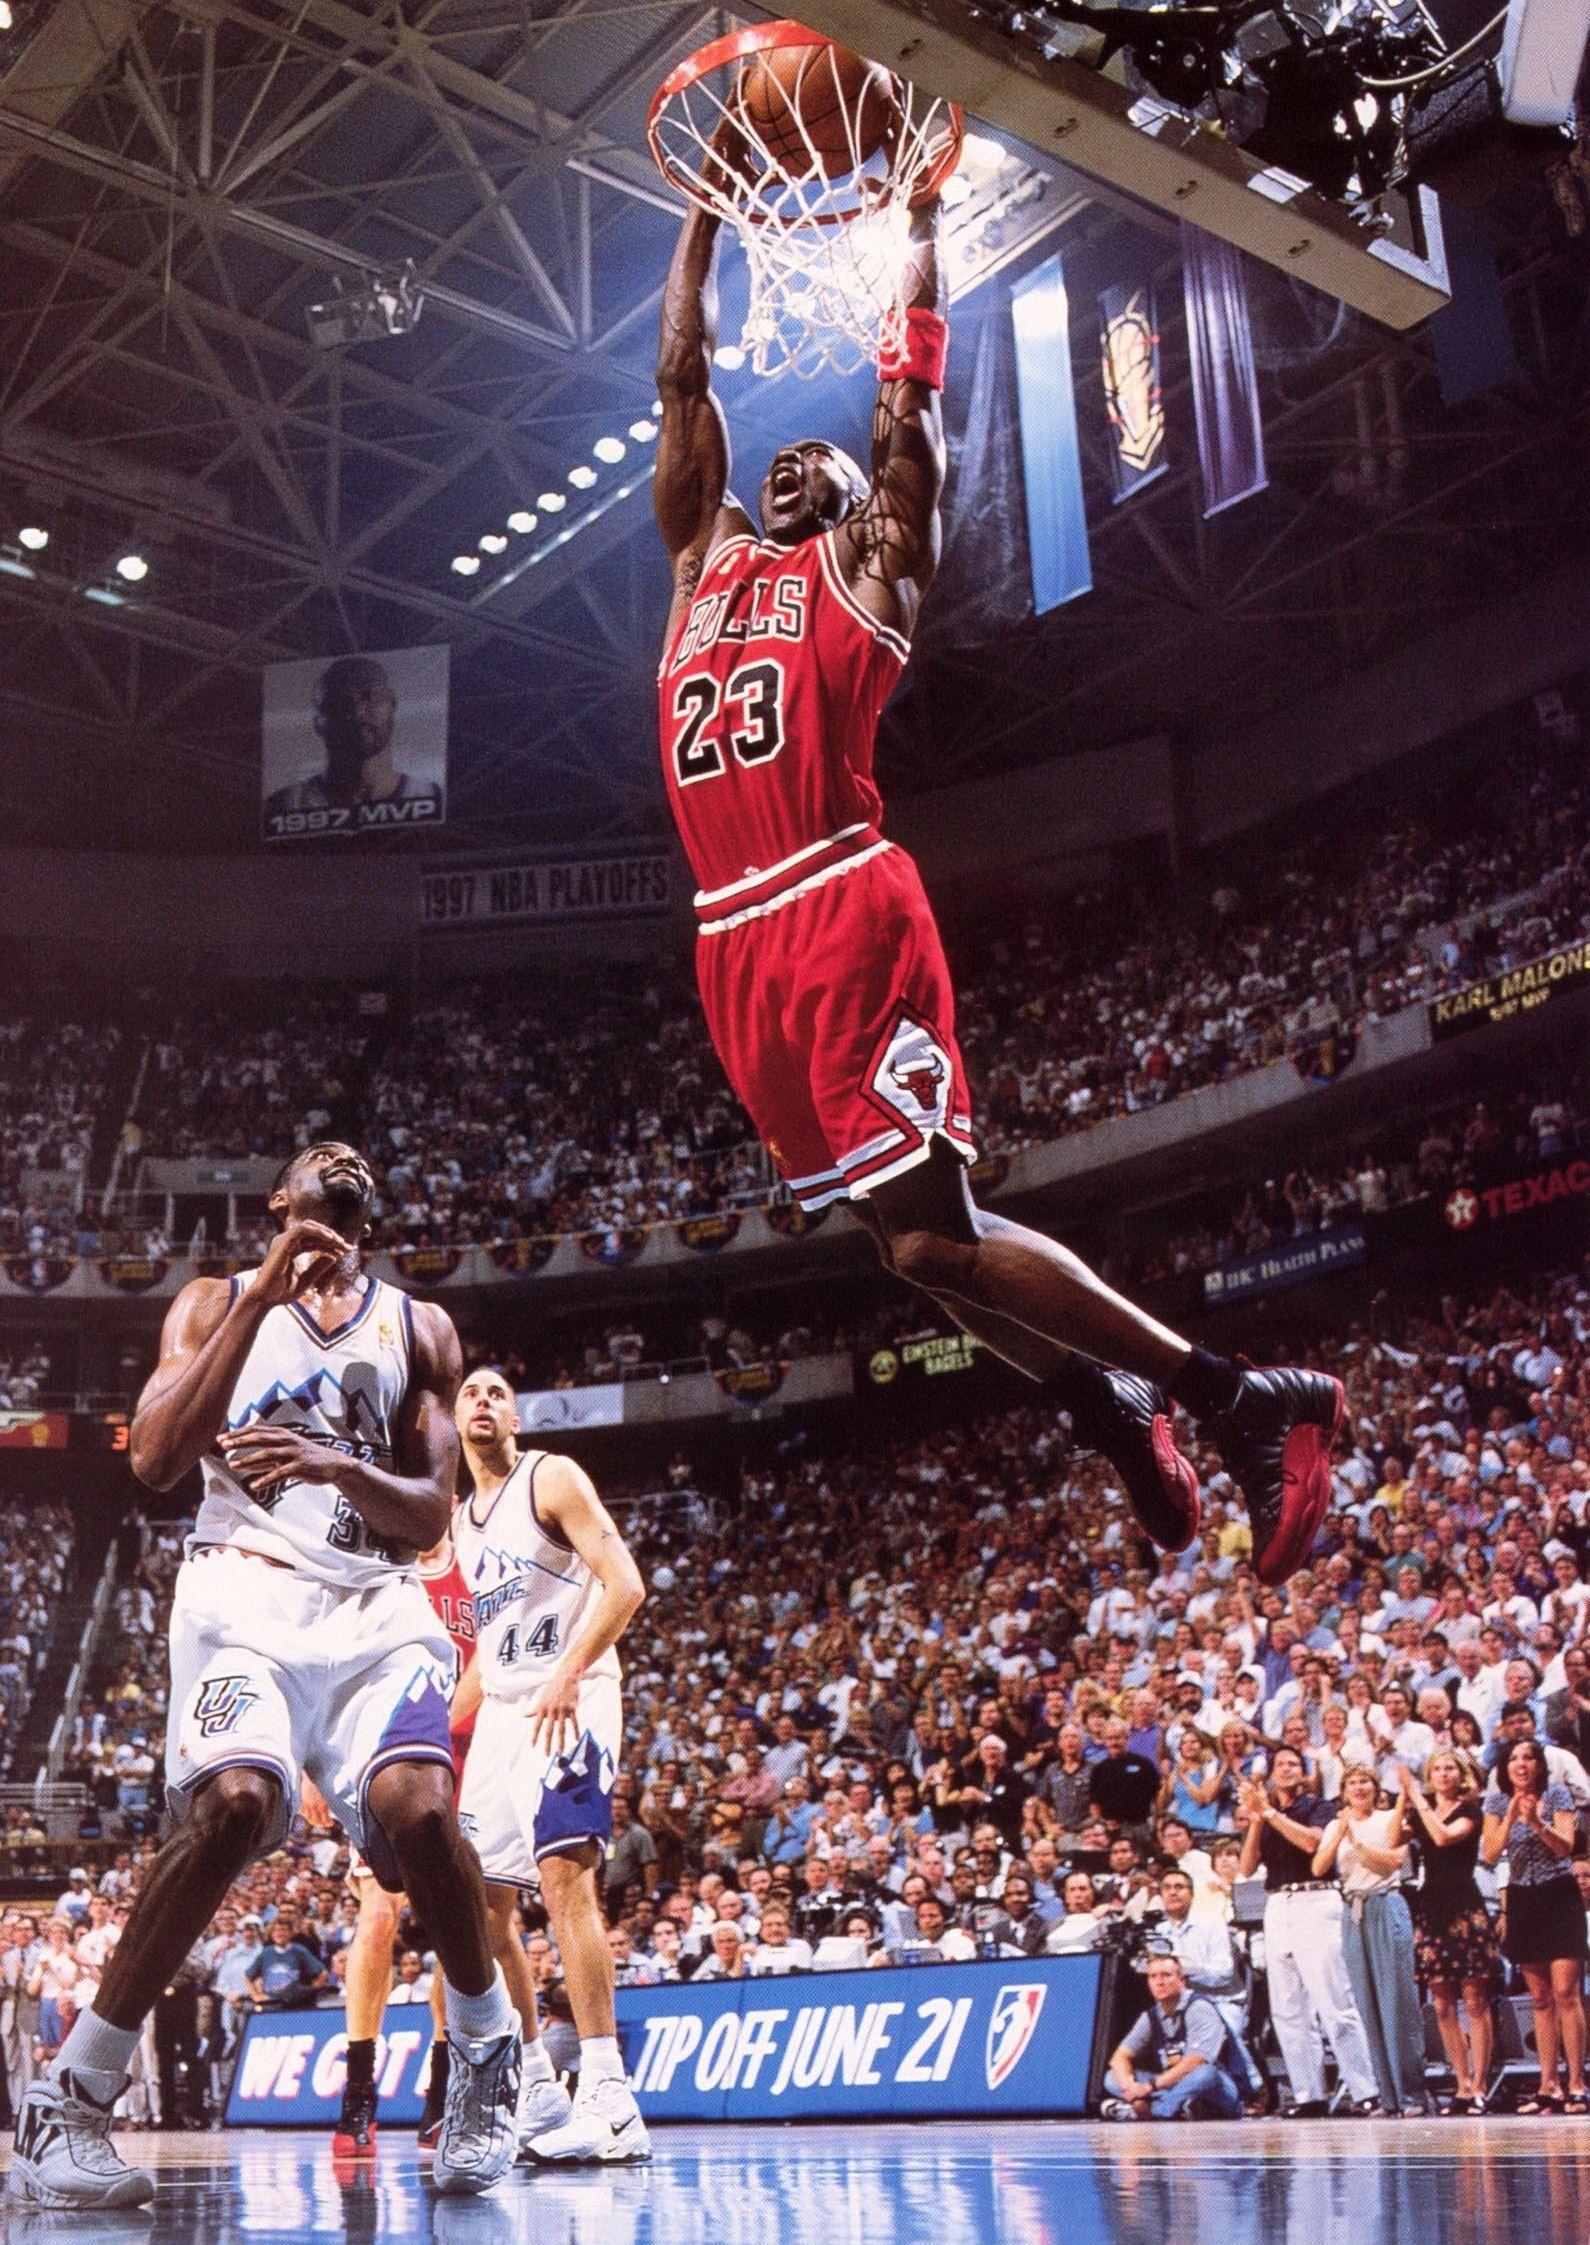 Michael Jordan's mansion available at $8 million discount. Michael